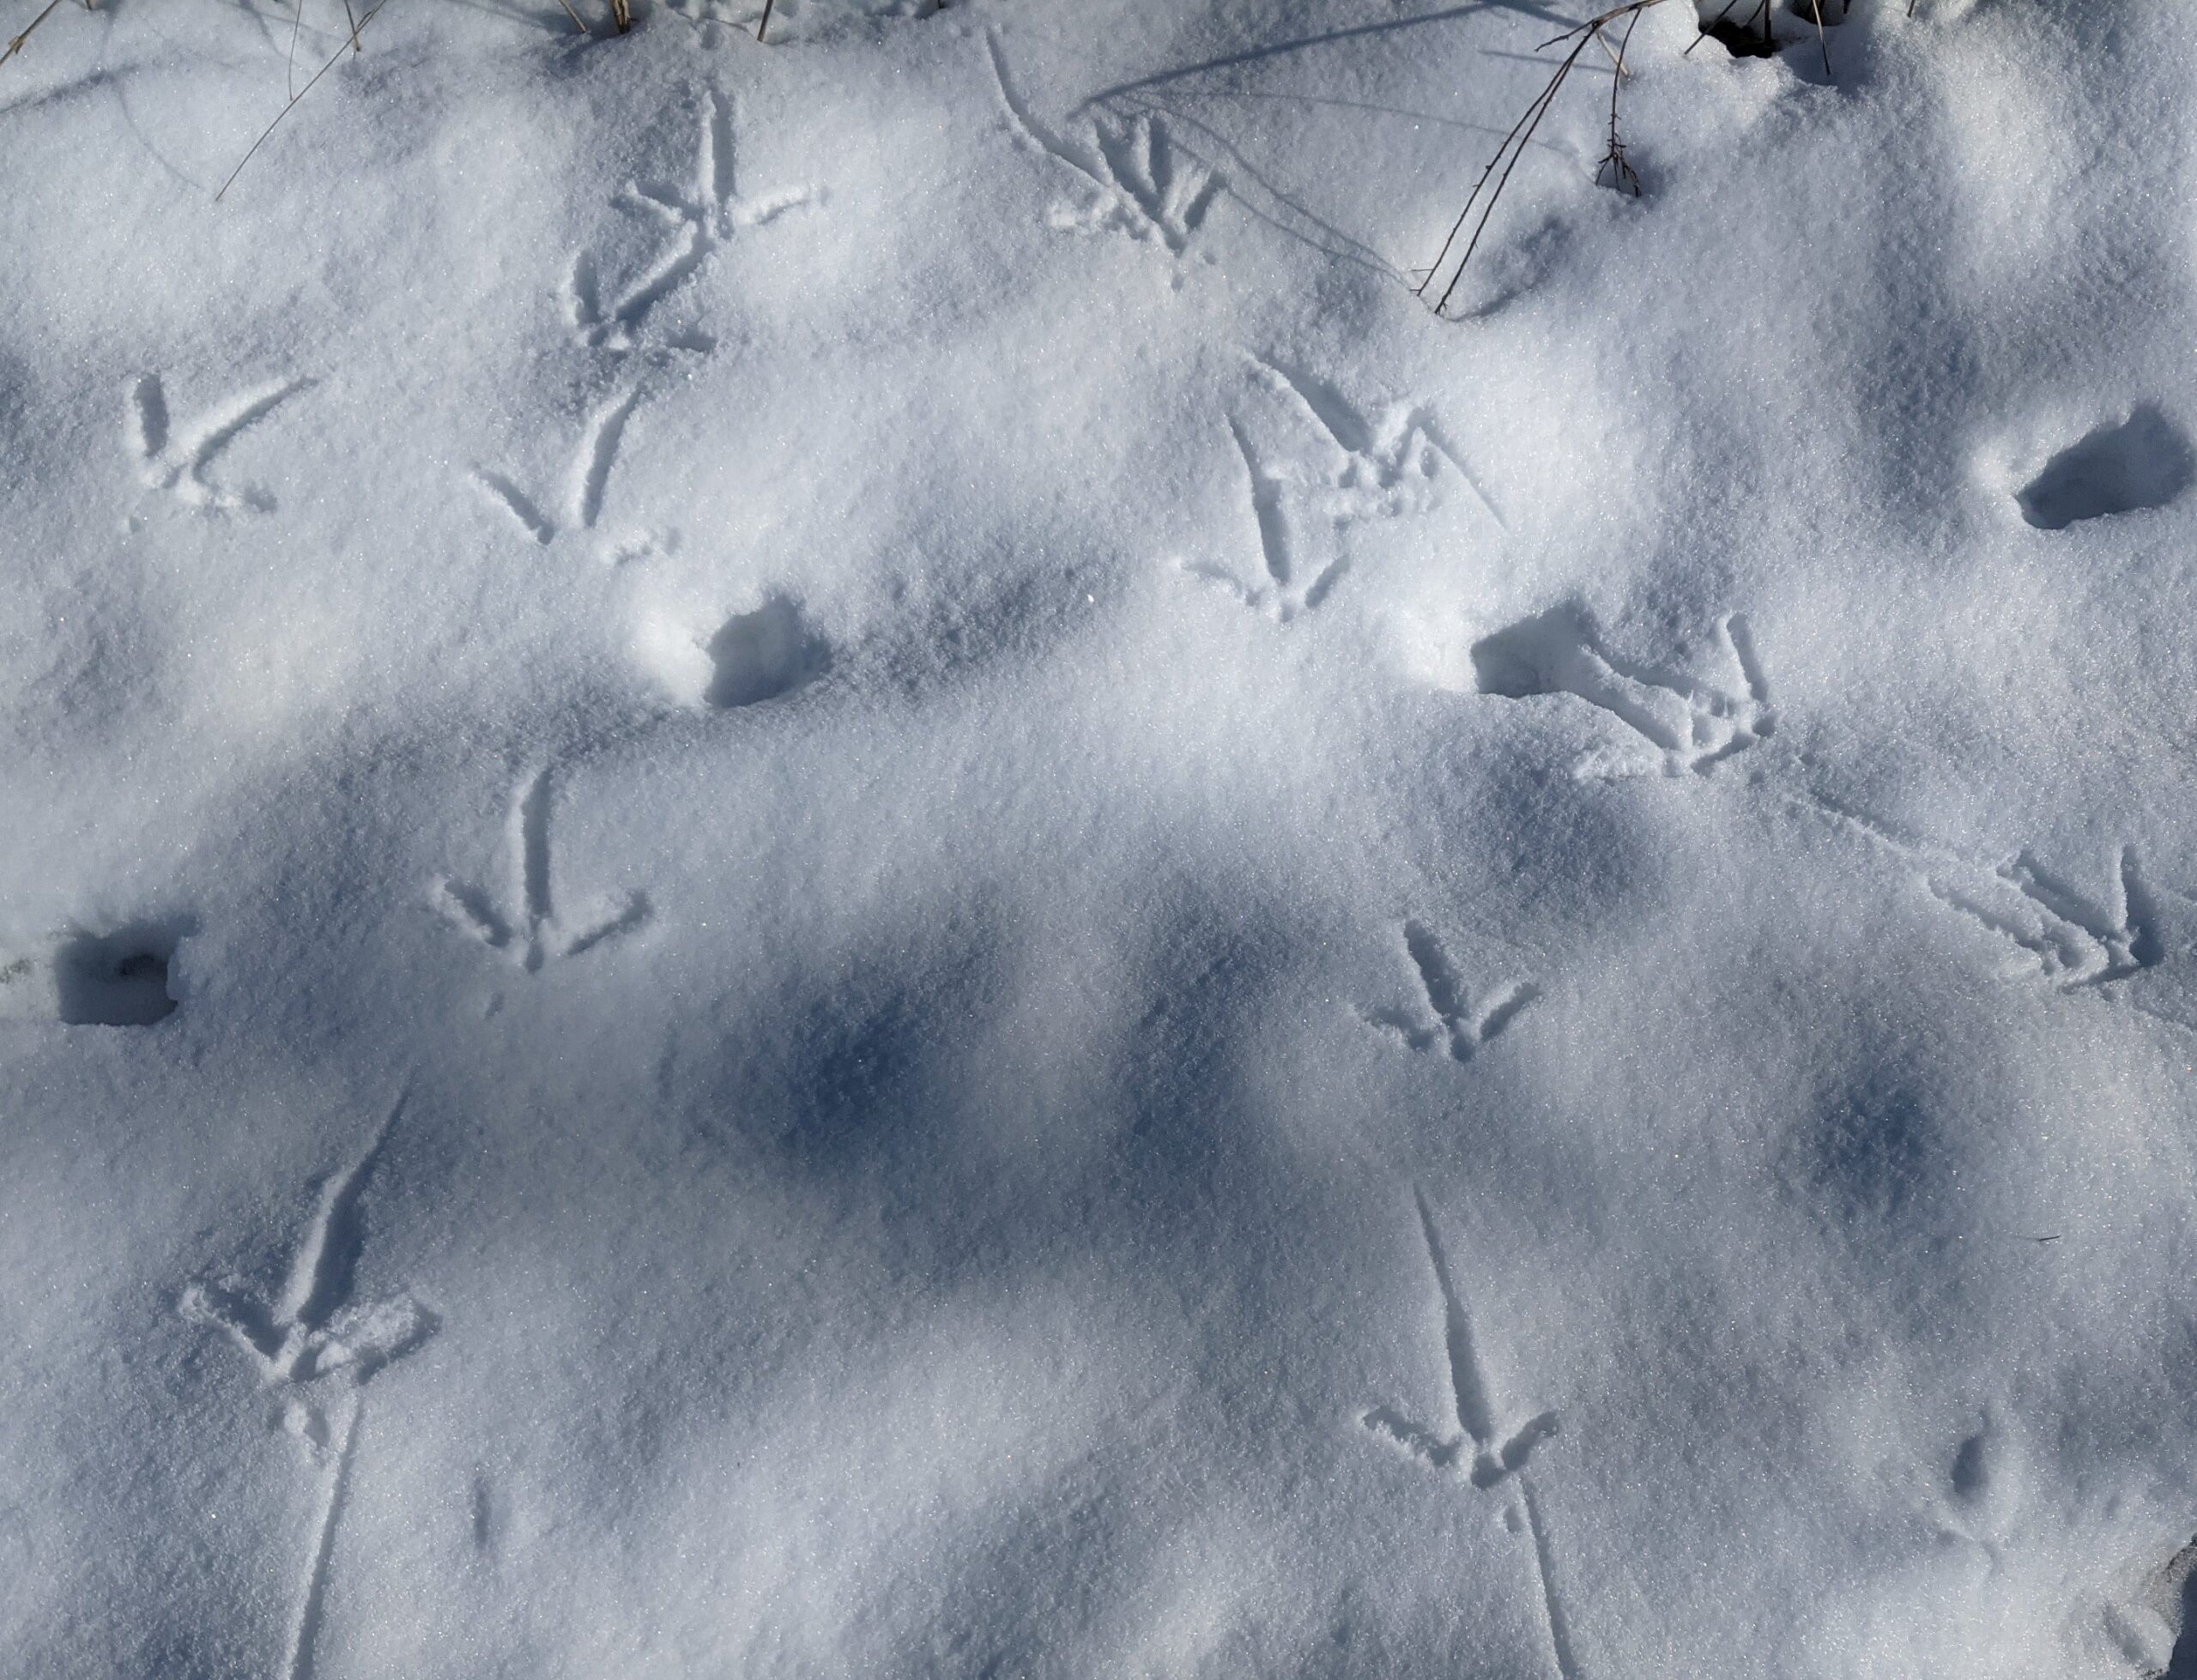 Wild Turkey tracks in the snow.